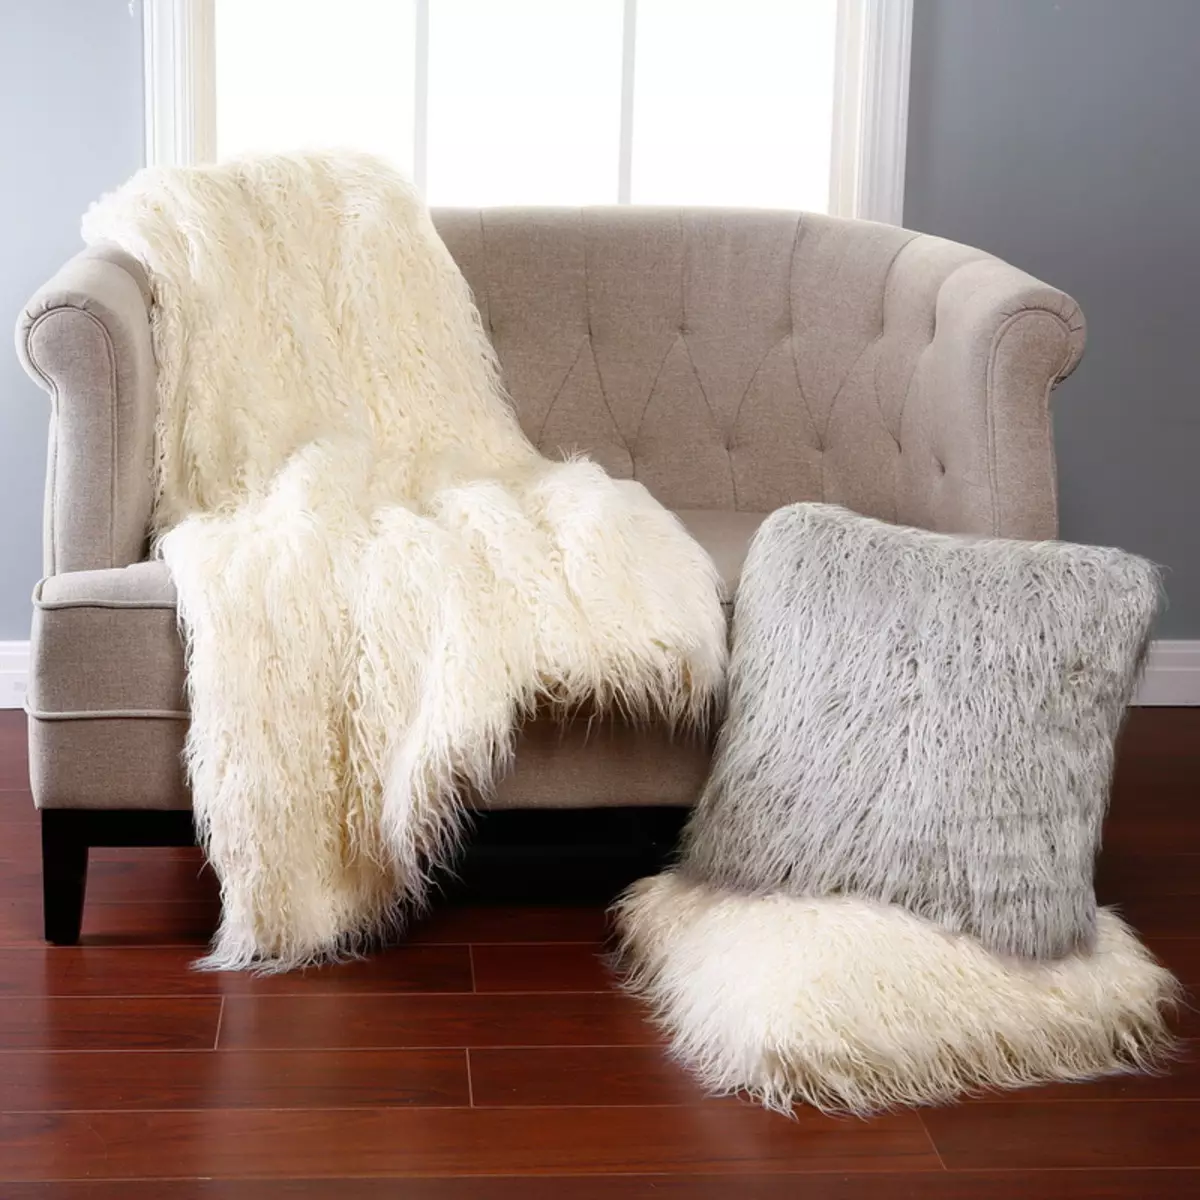 ସୋଫାବେଡ IKEA ଉପରେ କେସ୍: armrests ବିନା କଣ sofas ପାଇଁ bedspreads, ବିଶ୍ଵସ୍ତରୀୟ ଢ଼ାଲ ଓ ଅନ୍ୟାନ୍ୟ ବିକଳ୍ପ ଚୟନକୁ 8963_12